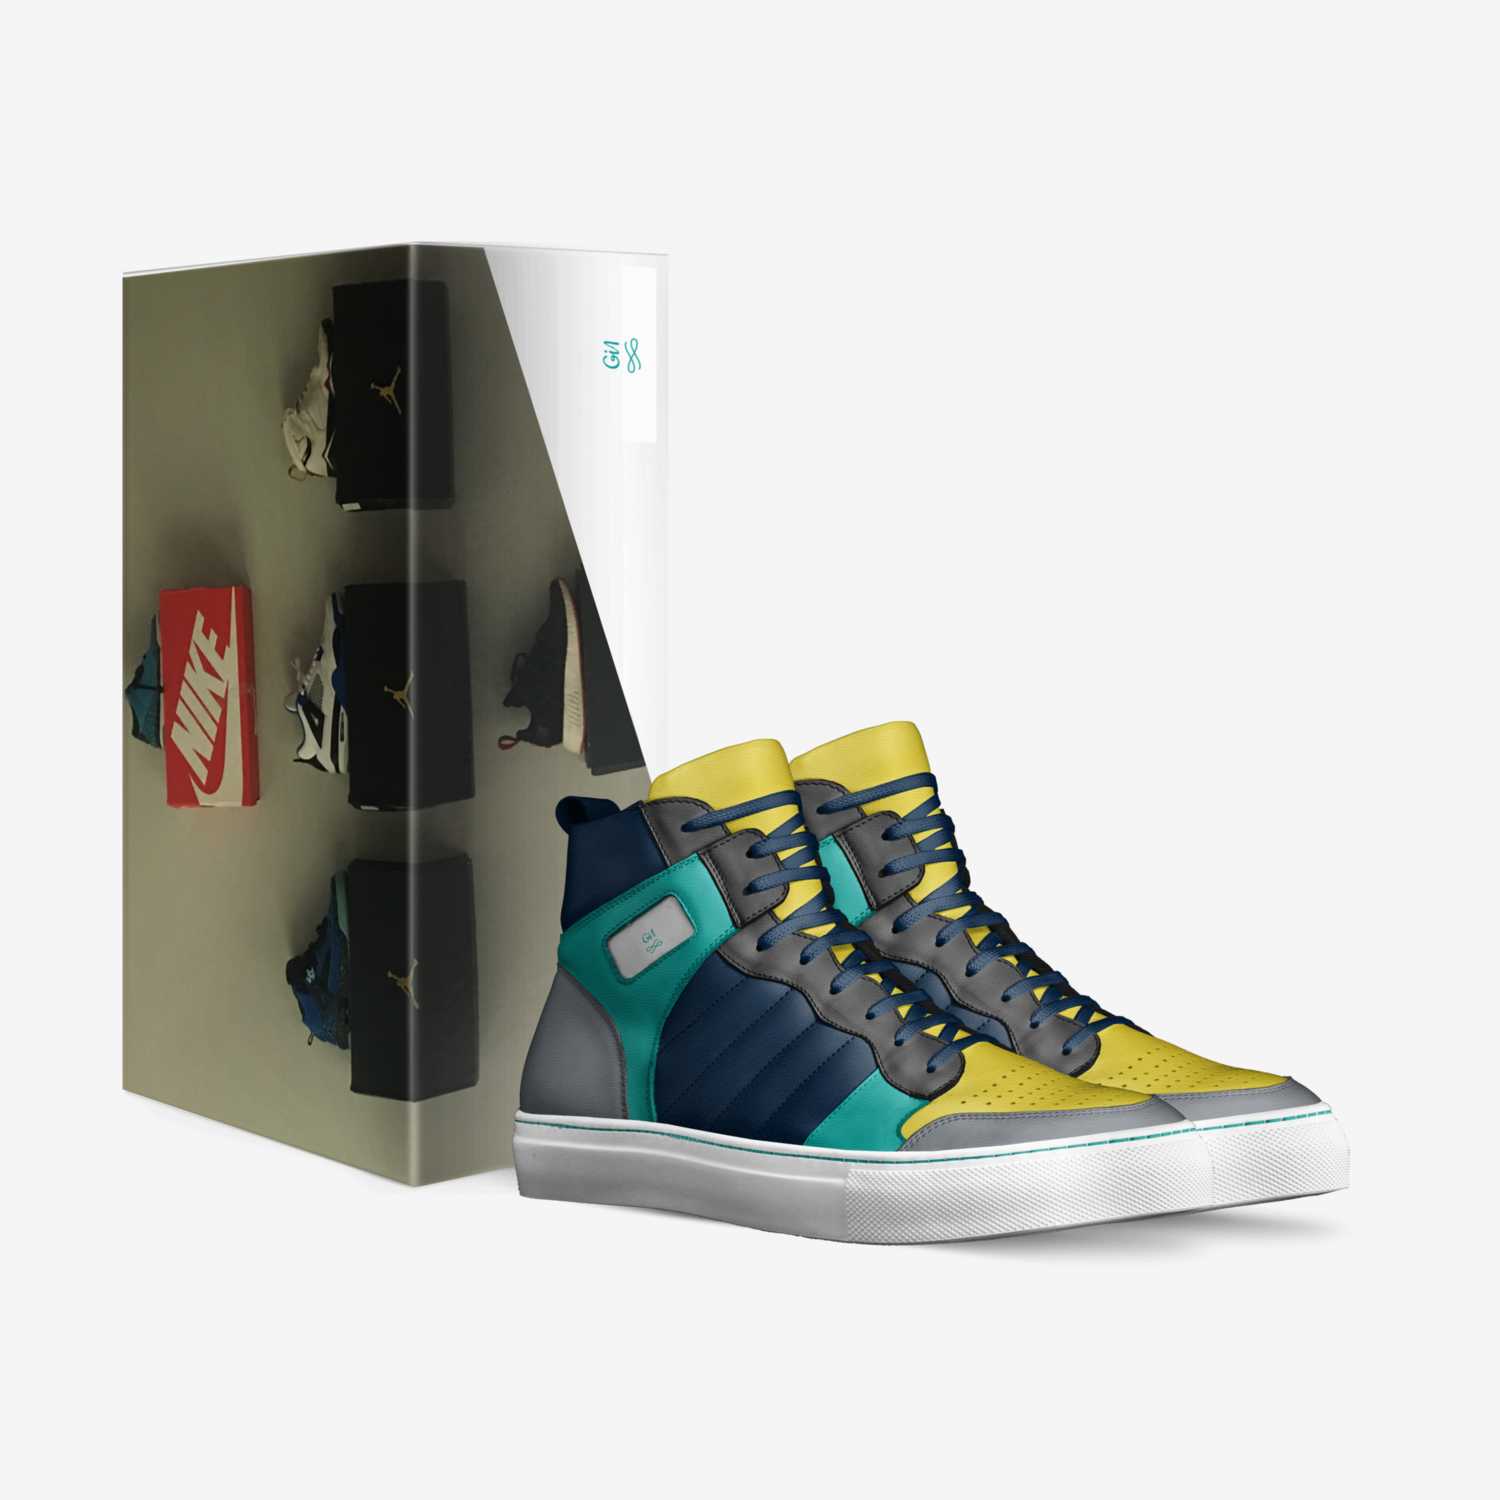 Gi1 custom made in Italy shoes by Gian Iacuele | Box view